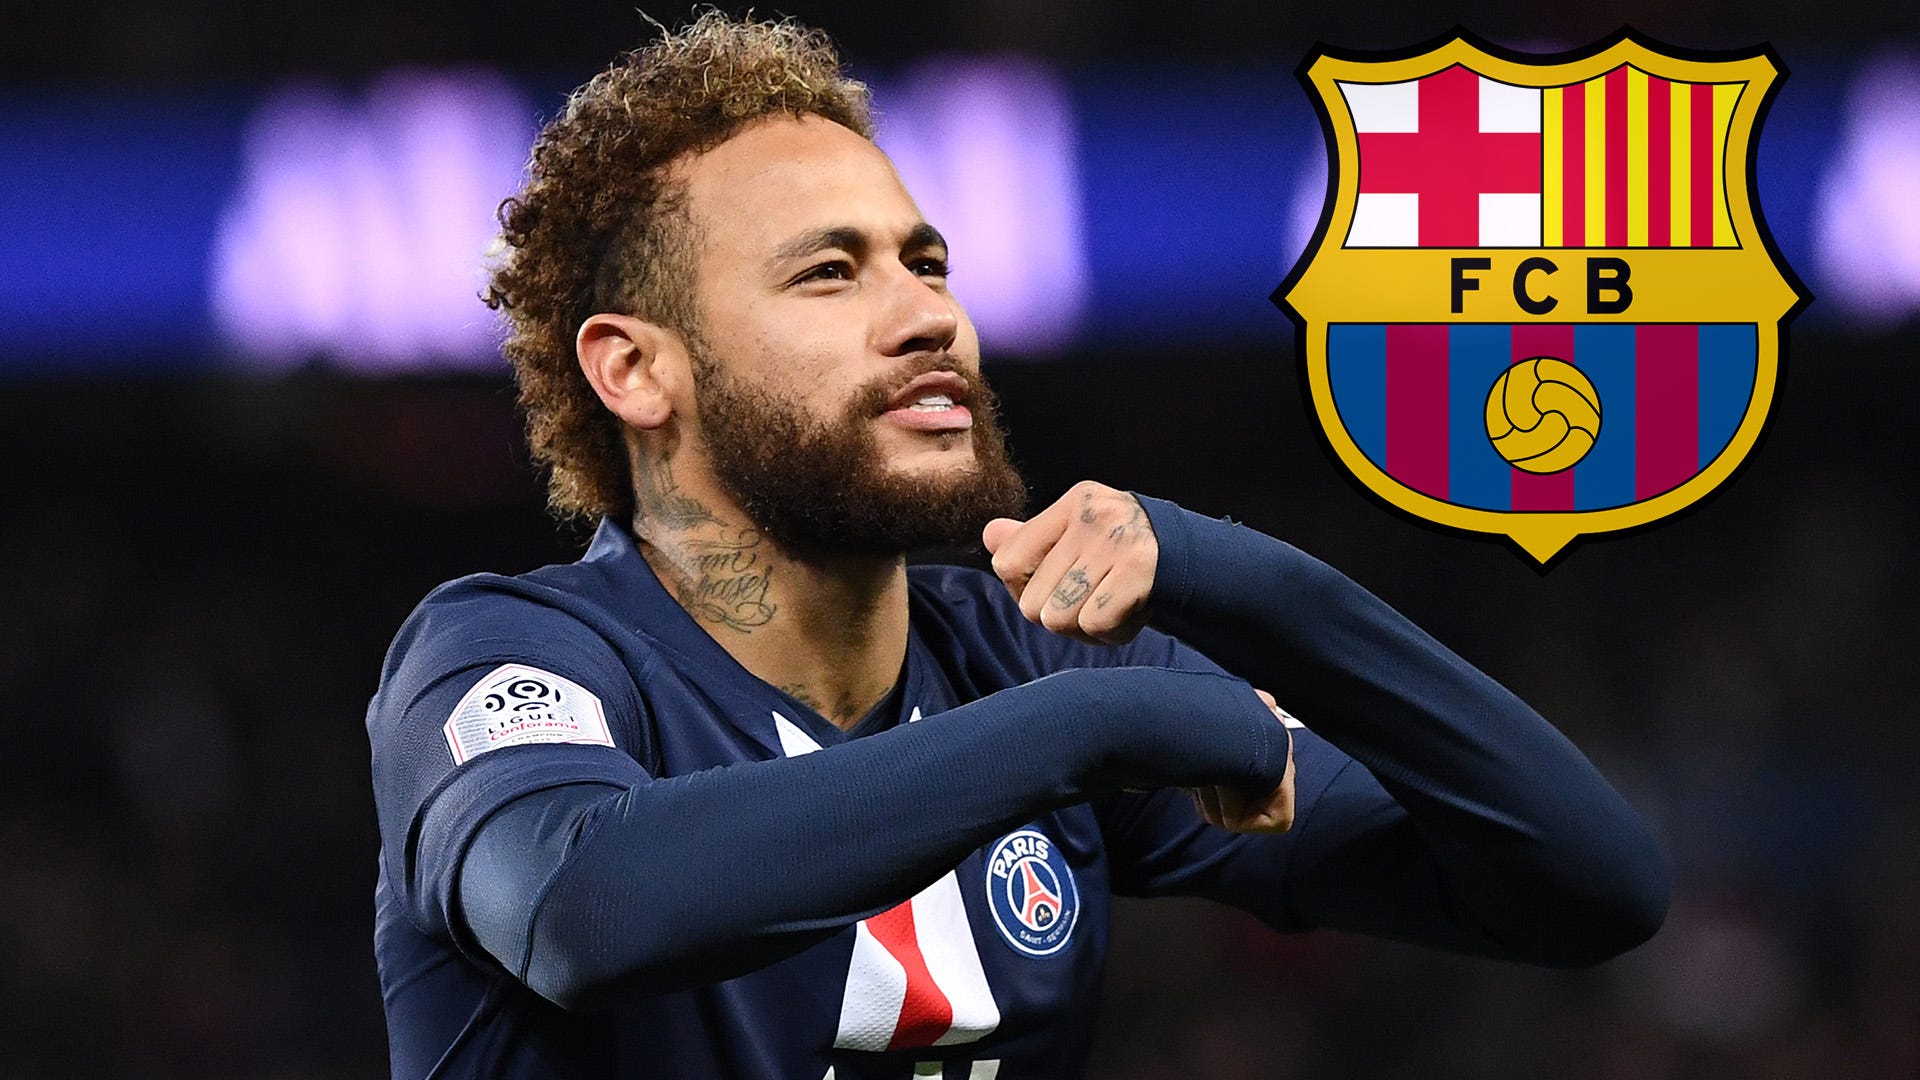 Neymar PSG Barcelona 2019-20